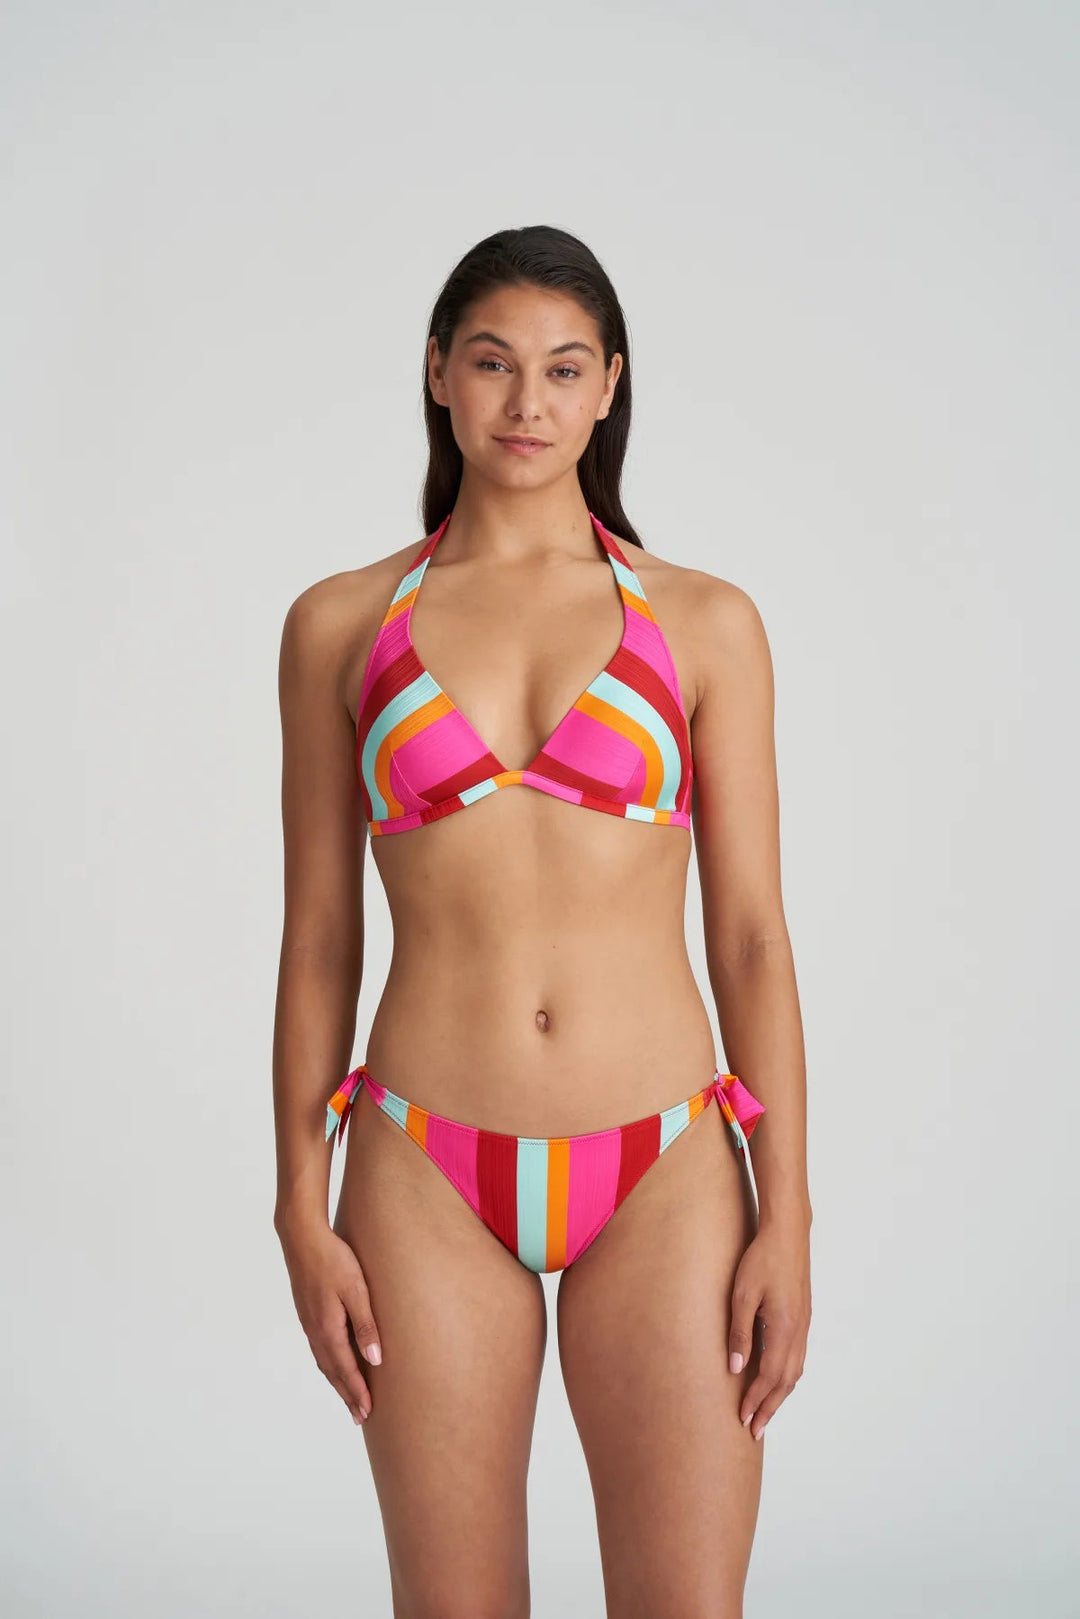 Marie Jo Swimwear Tenedos Padded Triangle Bikini Top - Jazzy Triangle Bikini Marie Jo Swimwear 